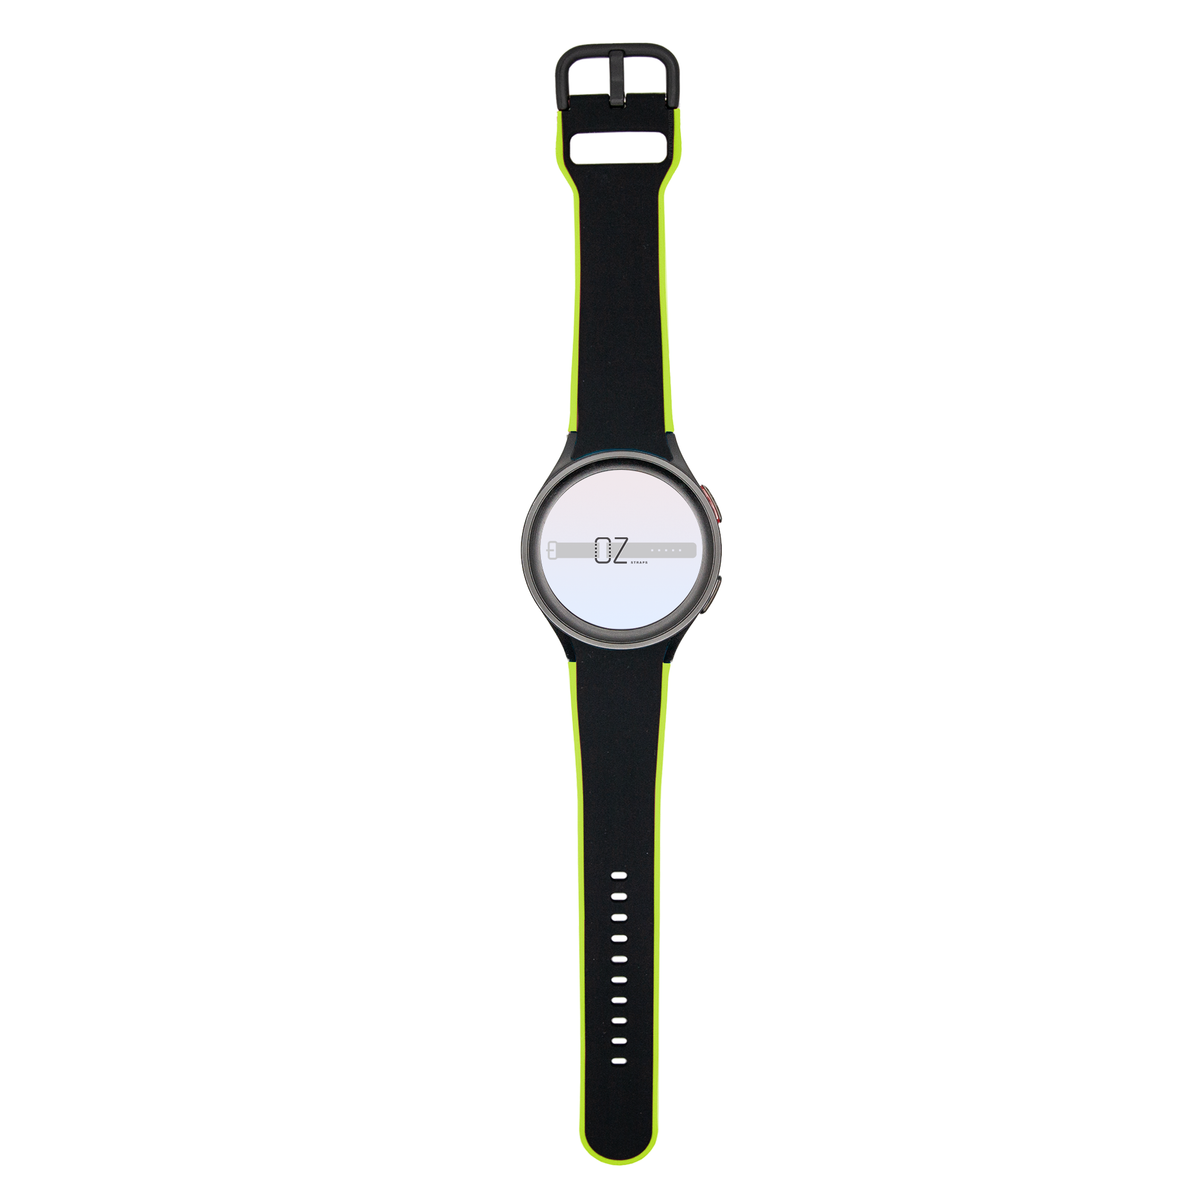 Duo-Tone Sport Samsung Galaxy Watch Band